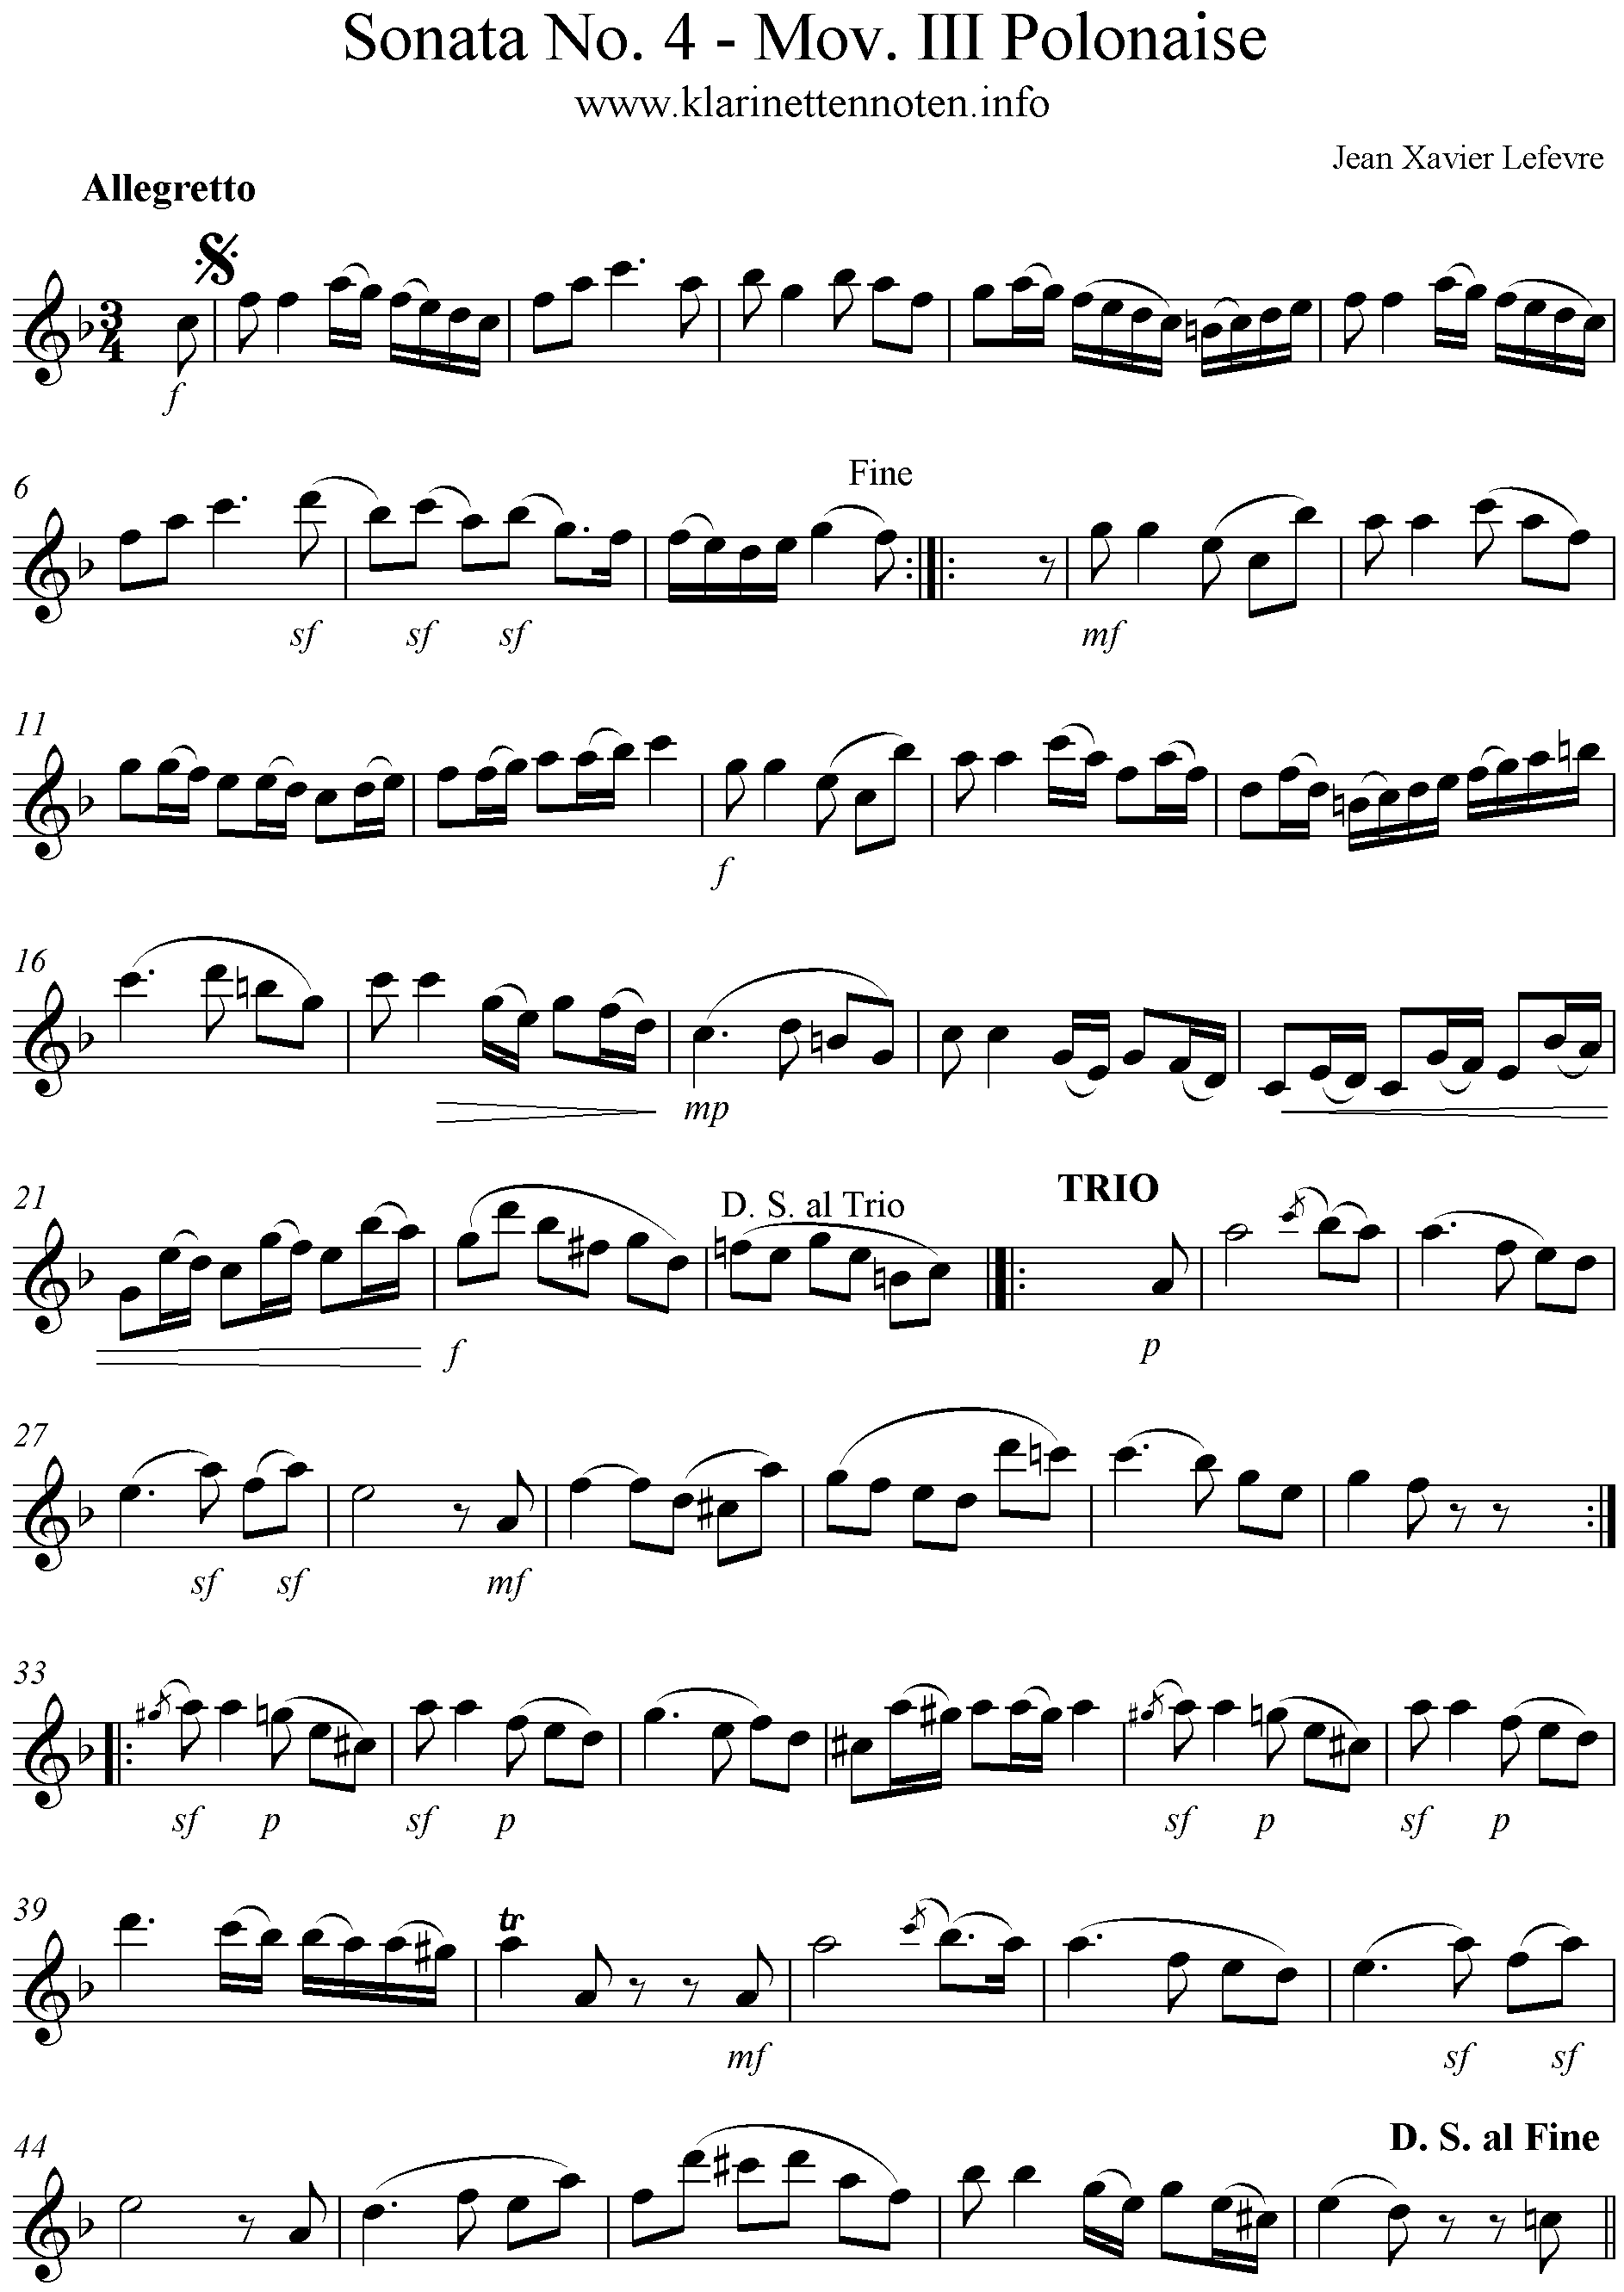 Lefevre Clarinet Sonata 4 - Polonaise